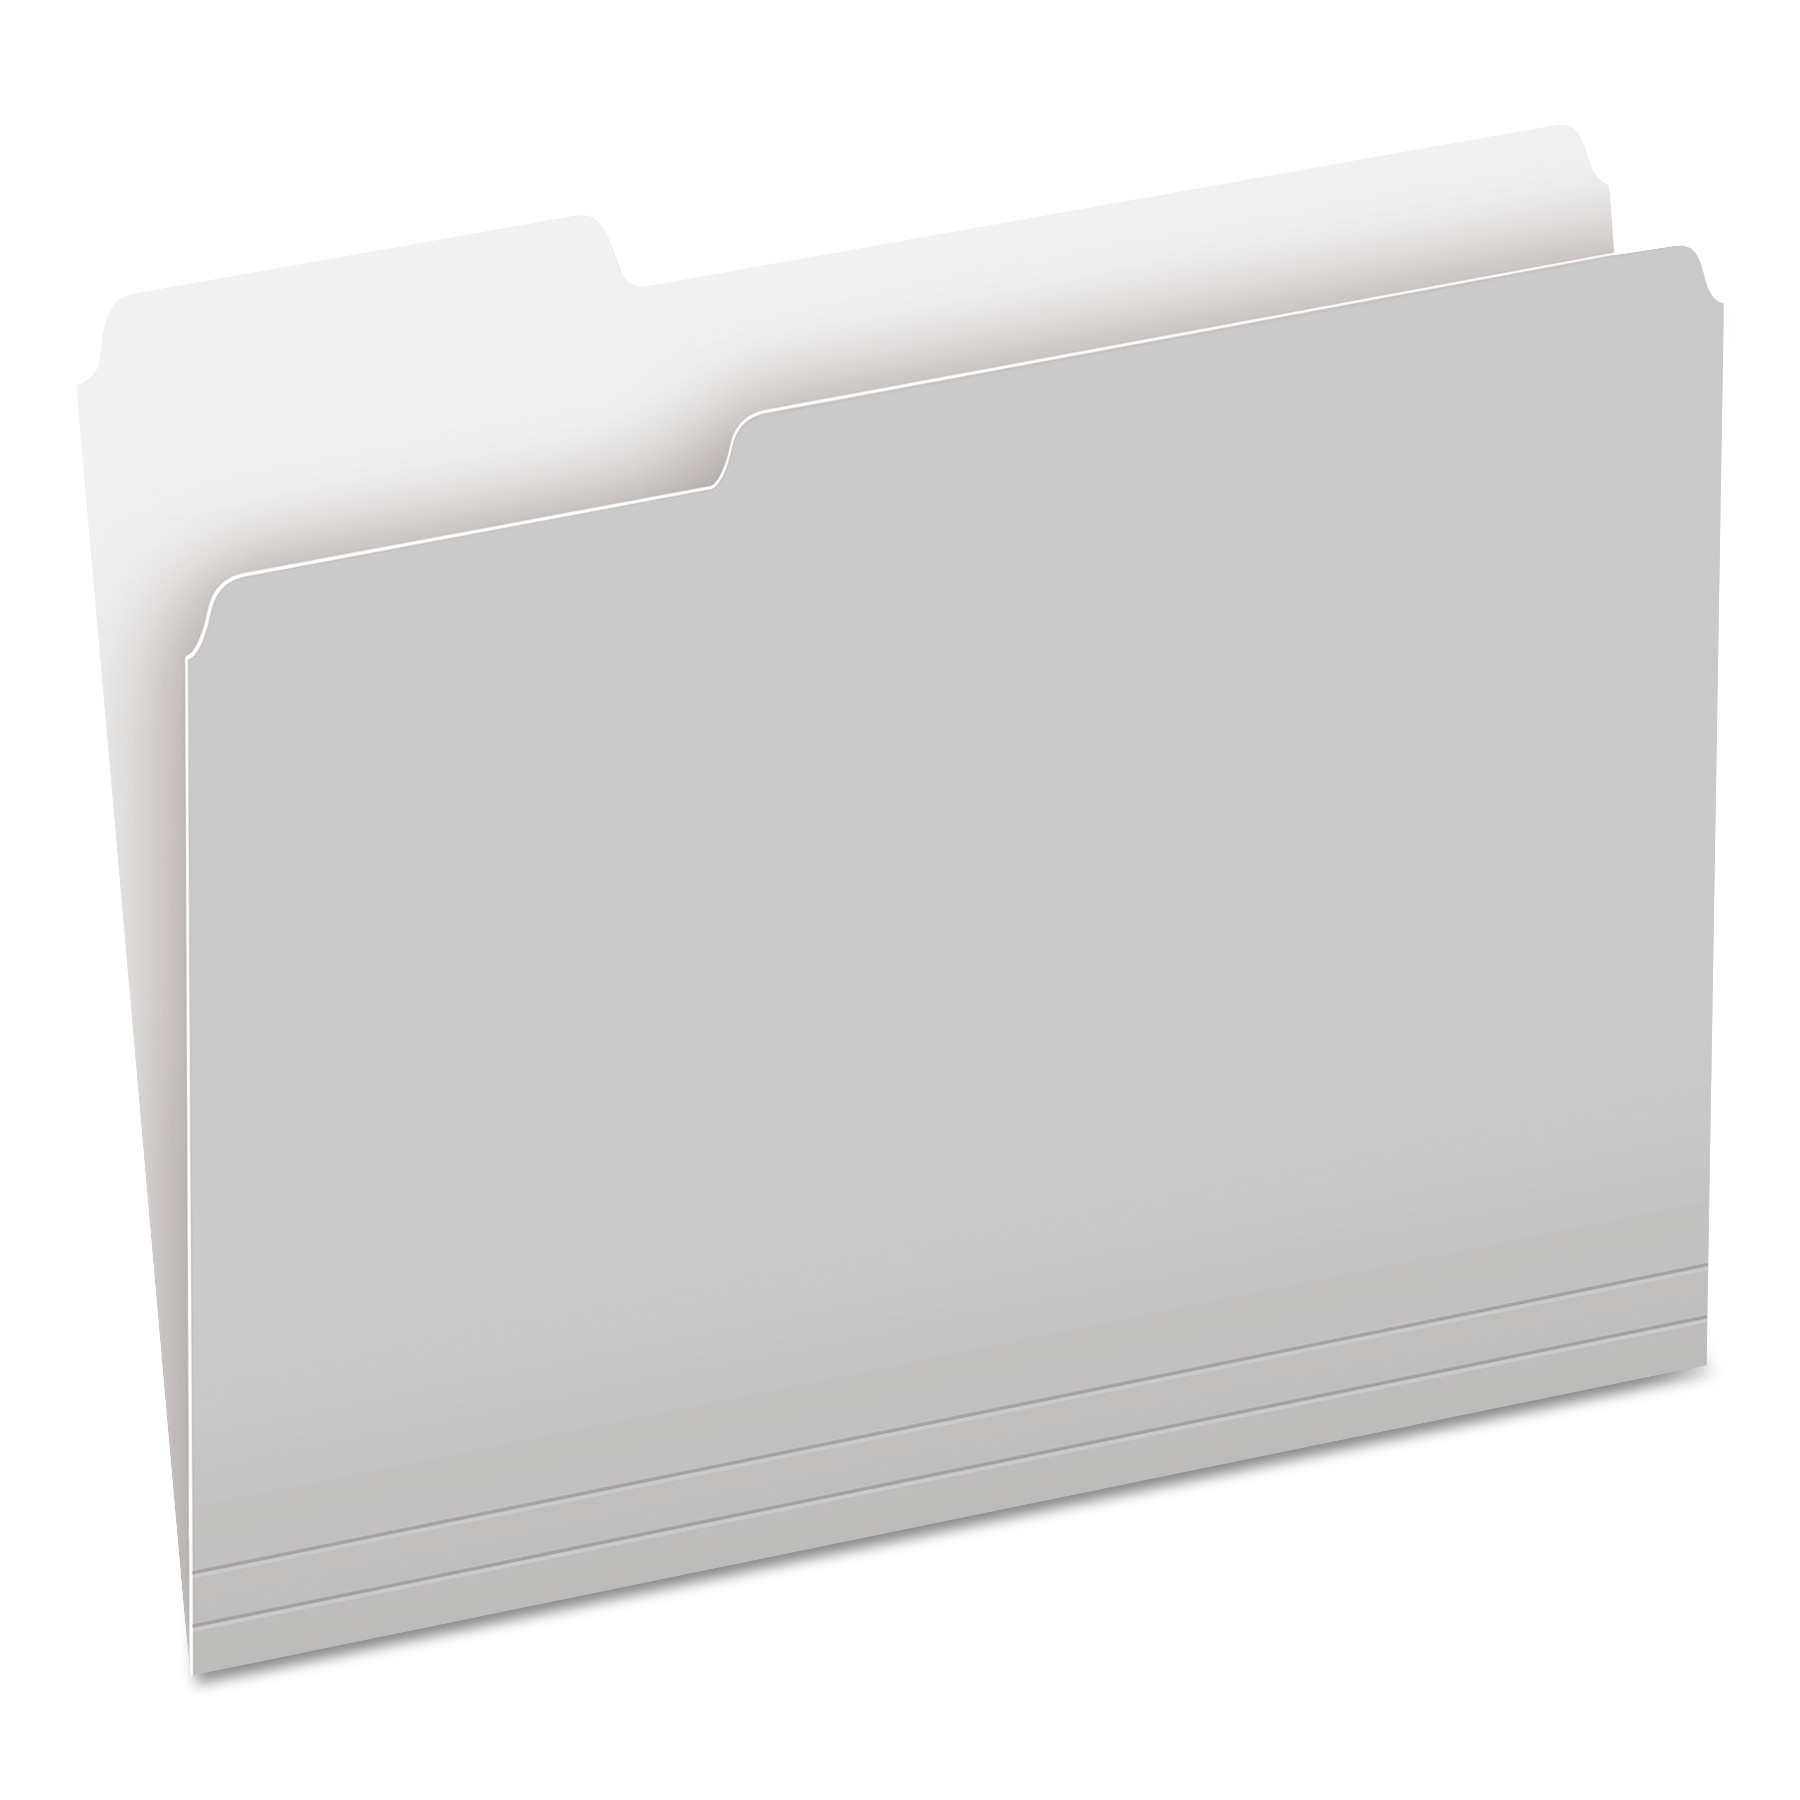  Pendaflex 152 1/3 GRA Colored File Folders, 1/3-Cut Tabs, Letter Size, Gray/Light Gray, 100/Box (PFX15213GRA) 